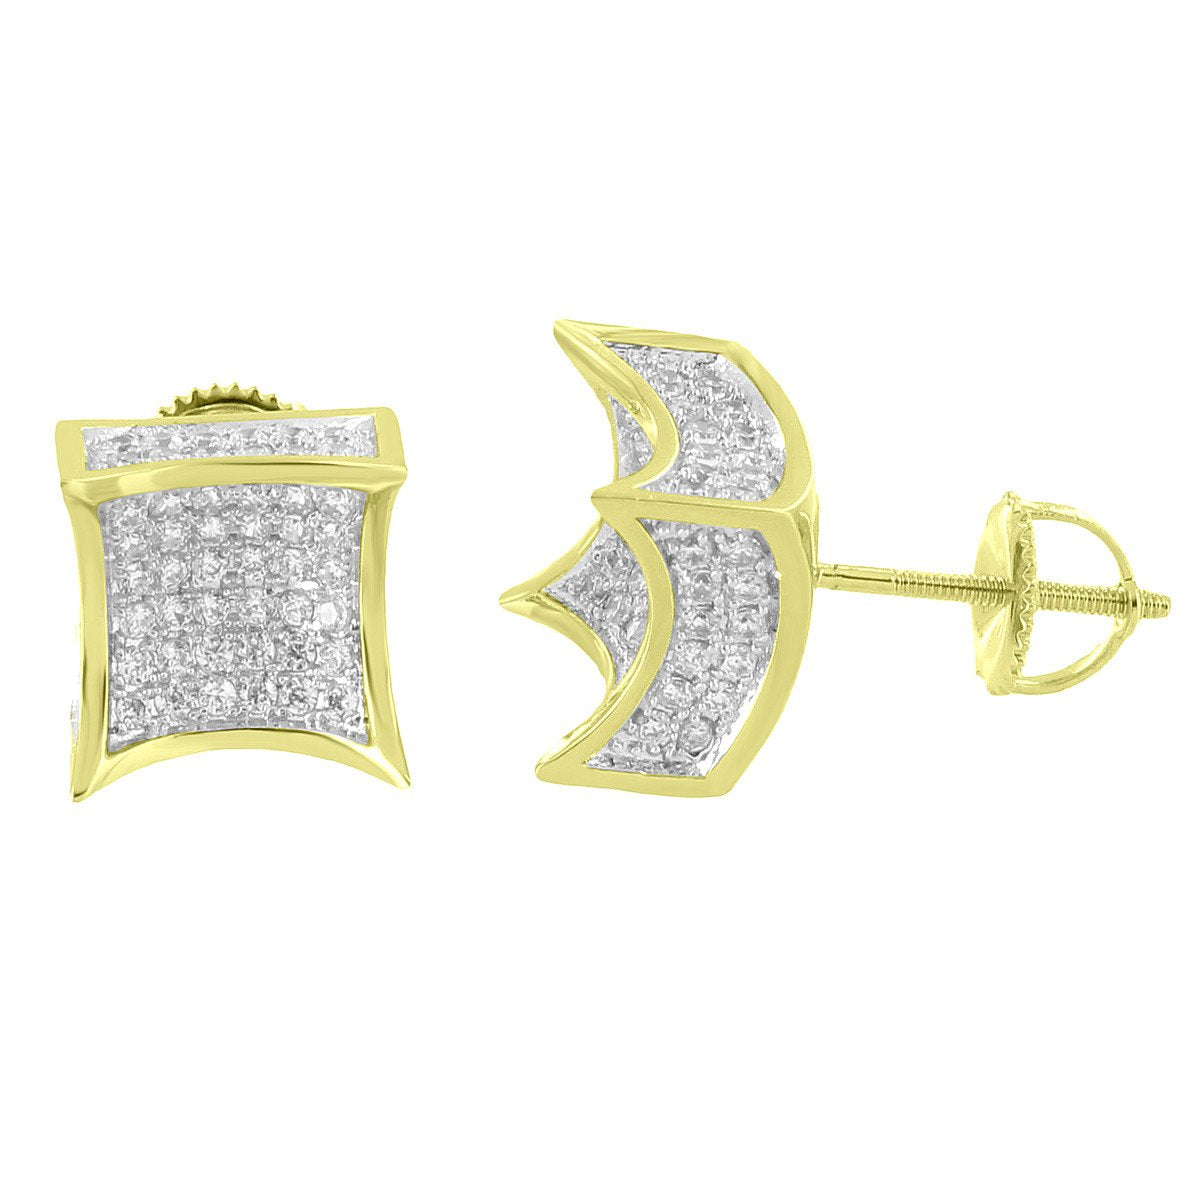 Kite Shape Earrings 14k Yellow Gold Finish  Simulated Diamonds Screw Back Studs